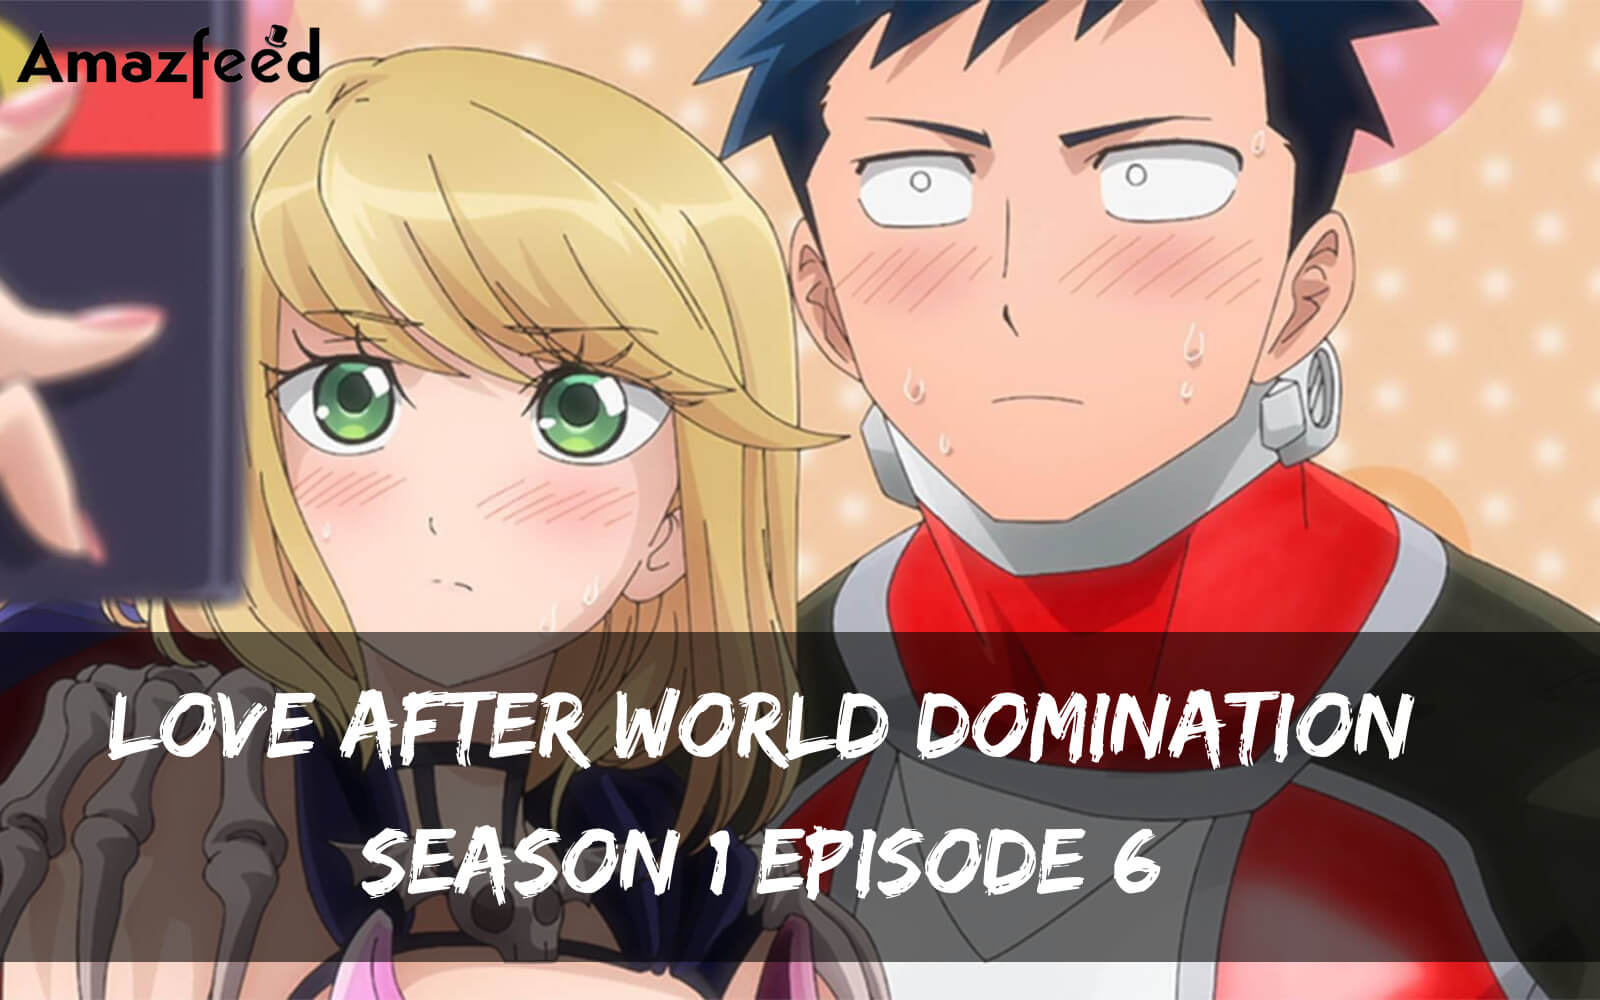 Koiseka Season 1 Episode 6 release date